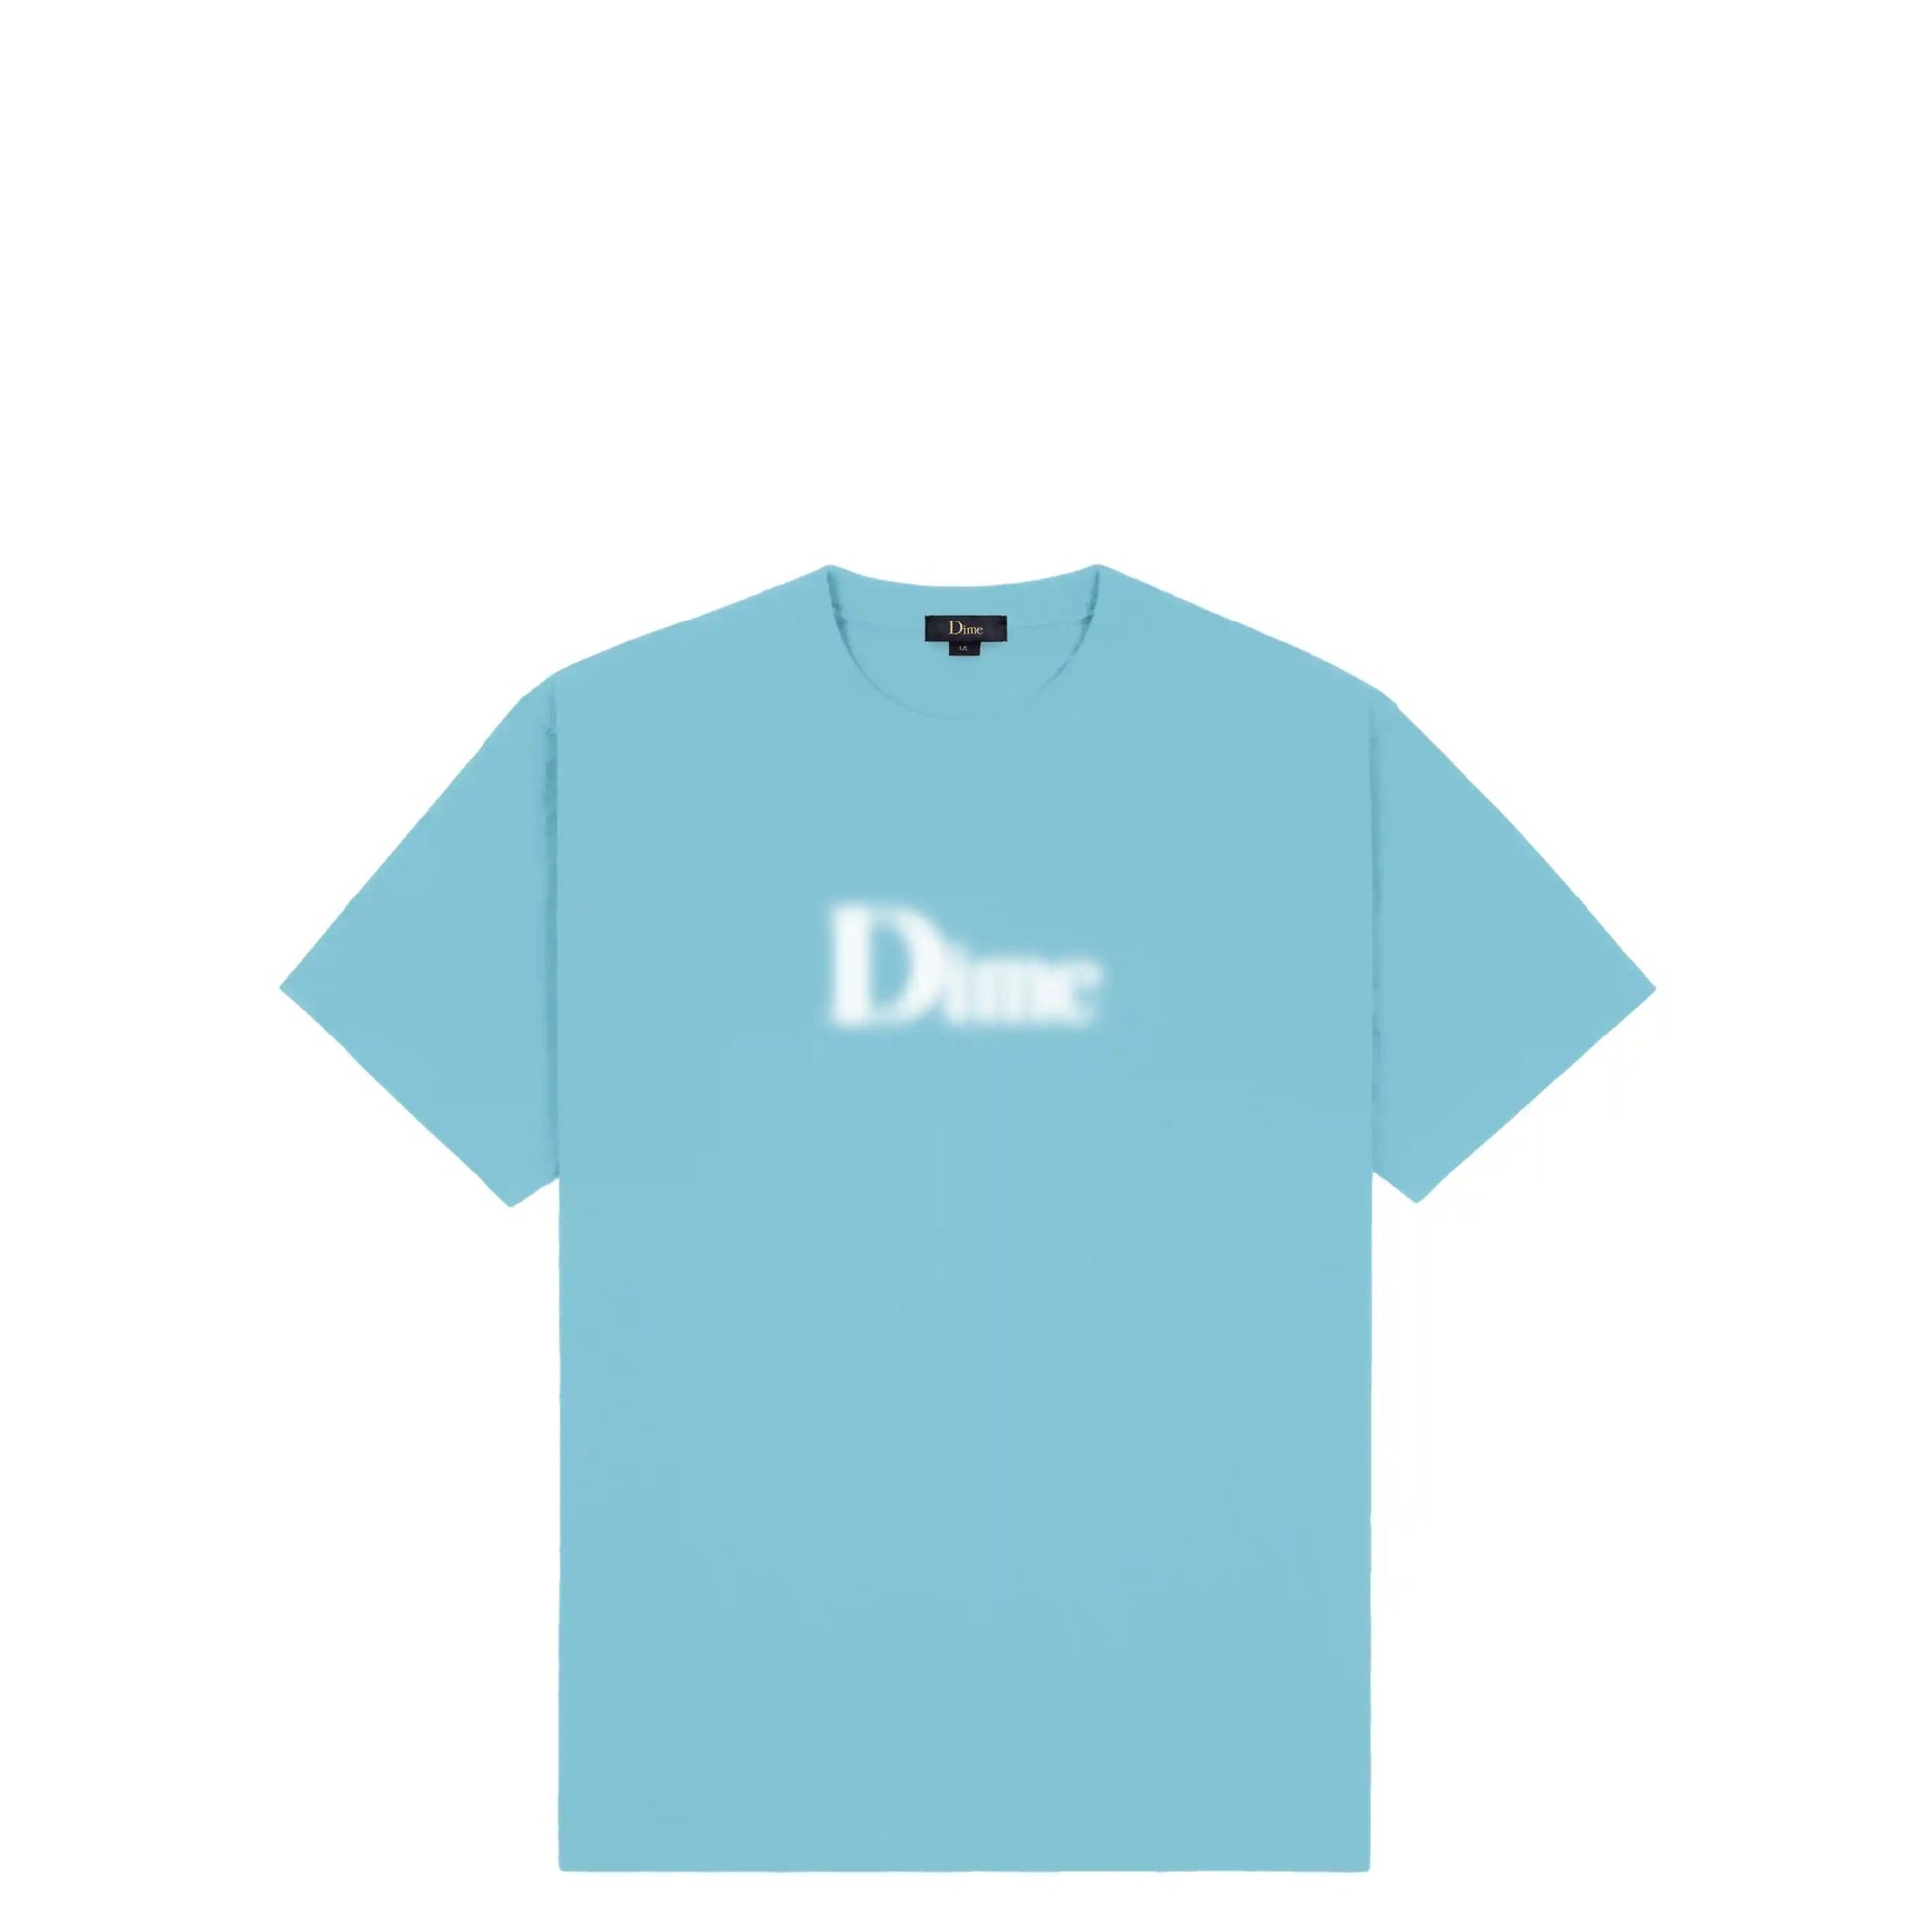 Dime Classic Blurry T-Shirt, ocean blue - Tiki Room Skateboards - 1